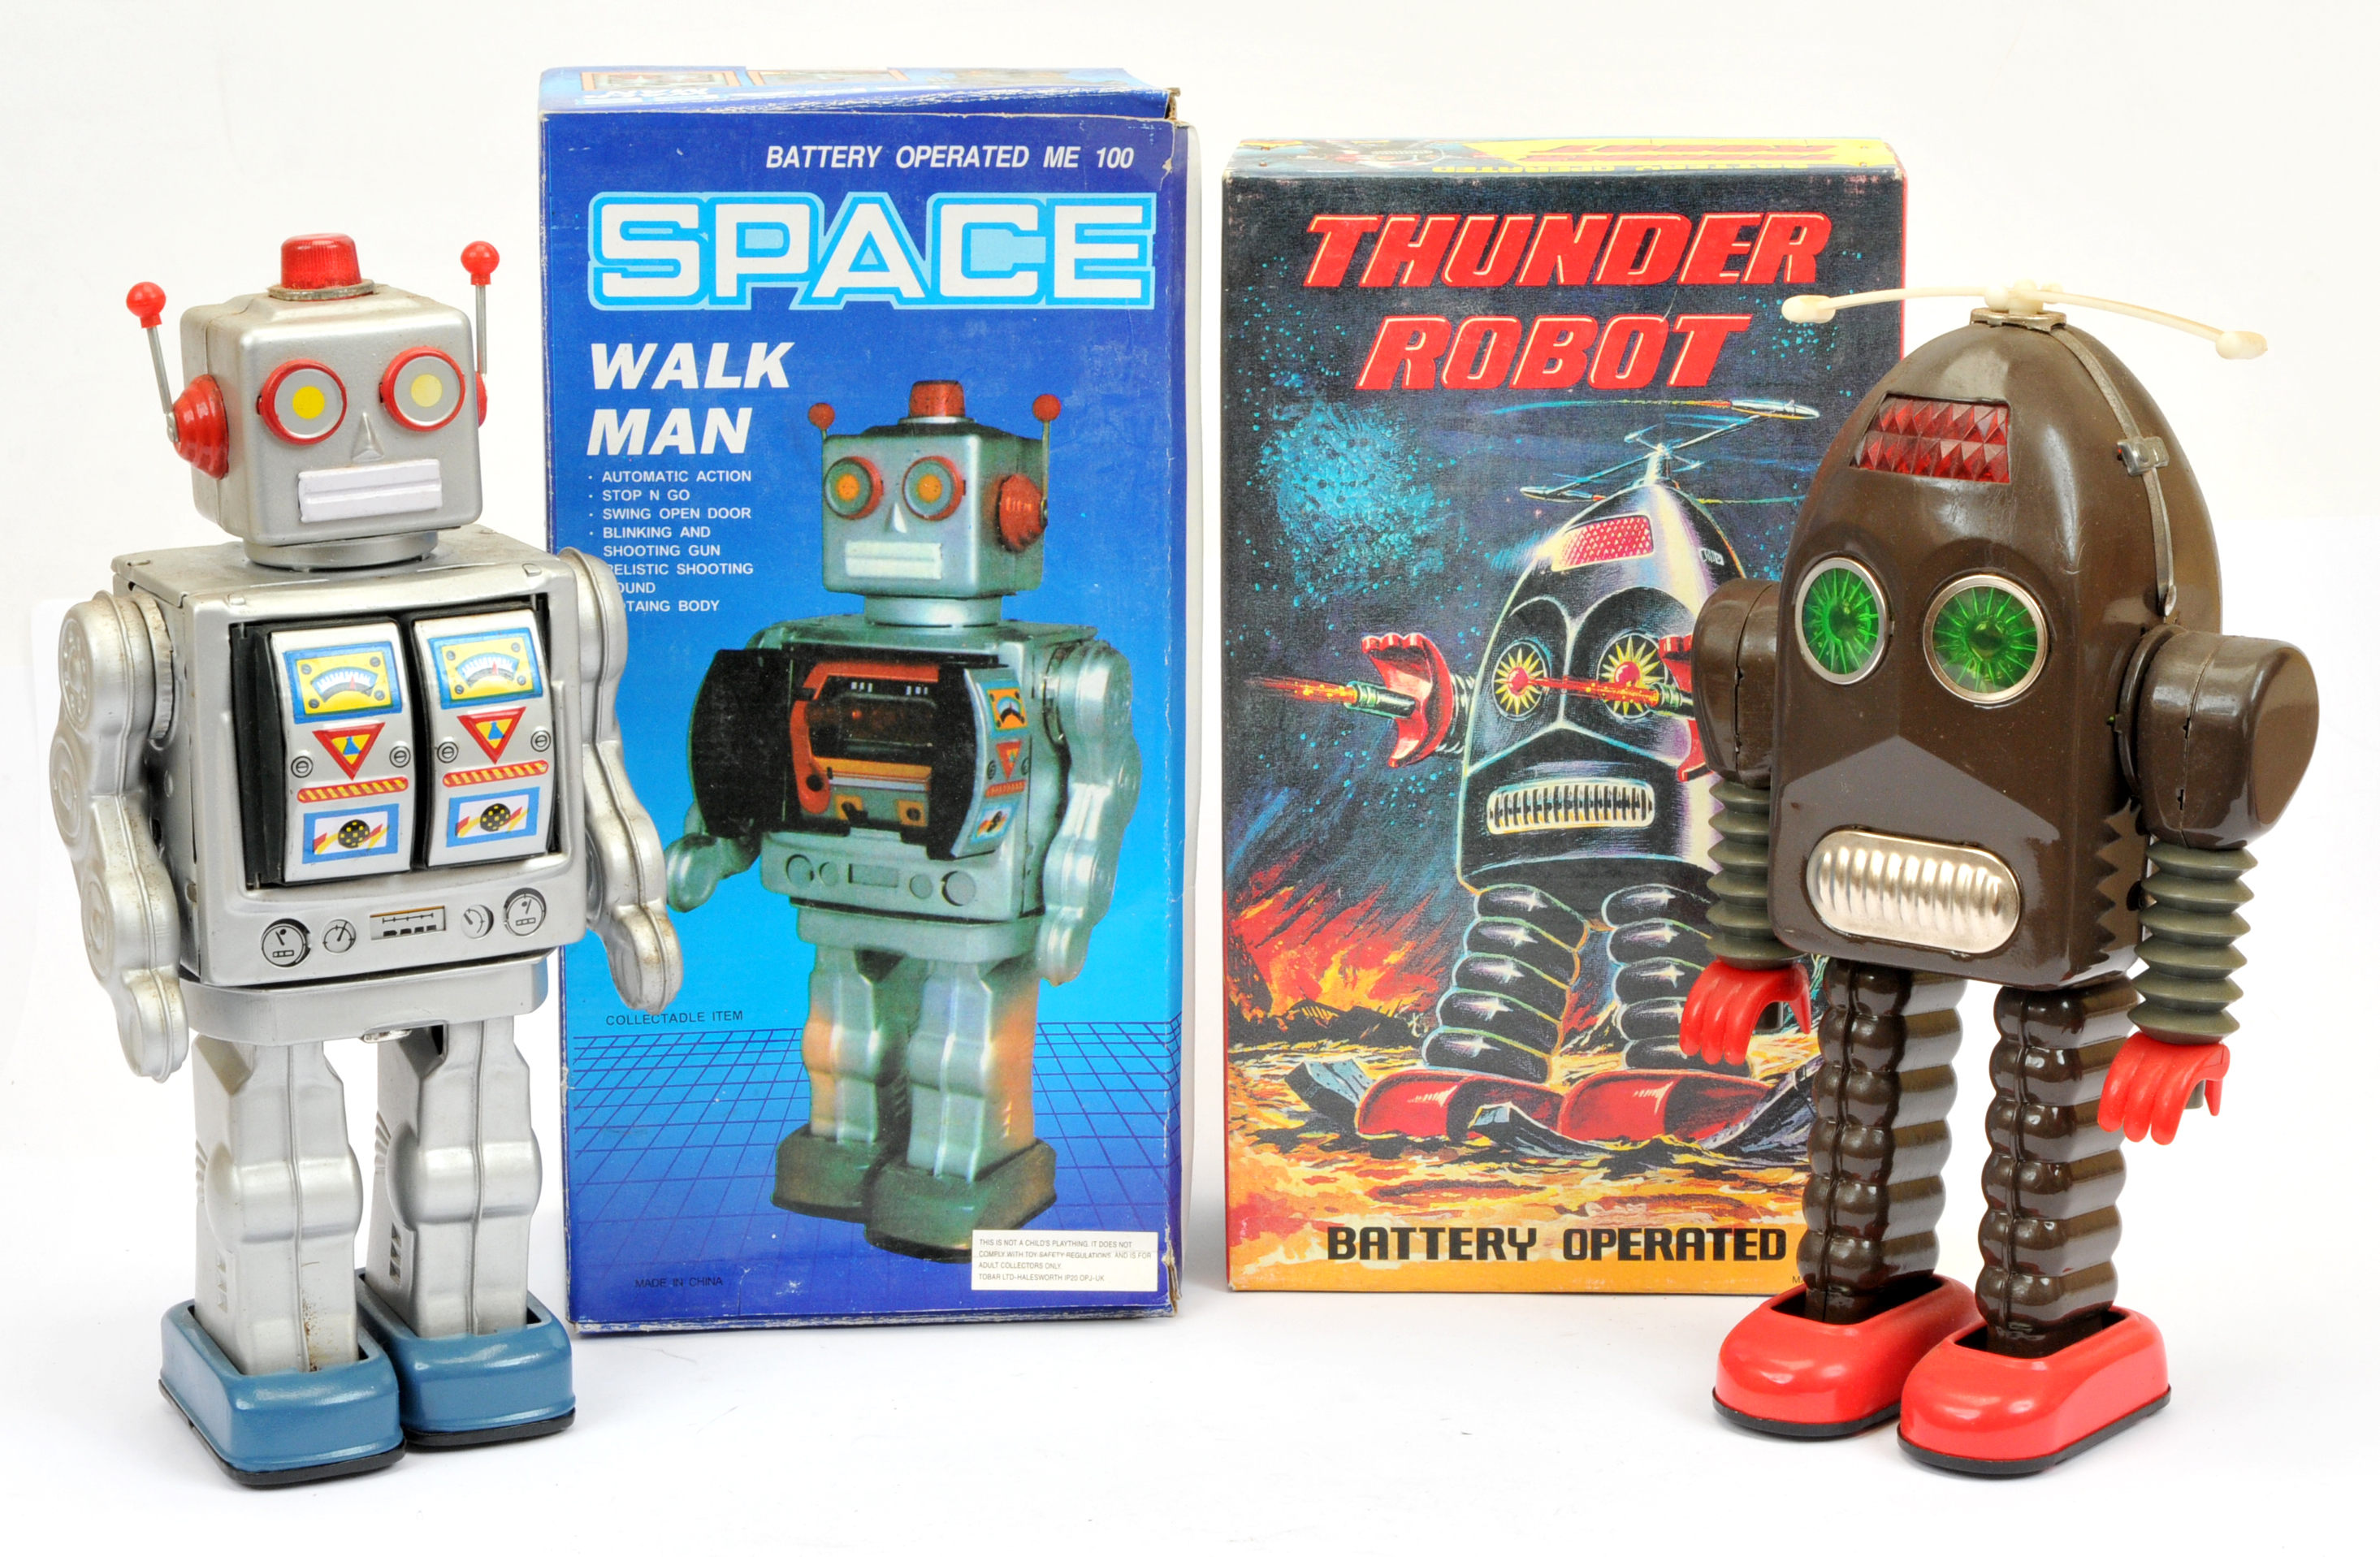 Thunder Robot and Space Walk Man